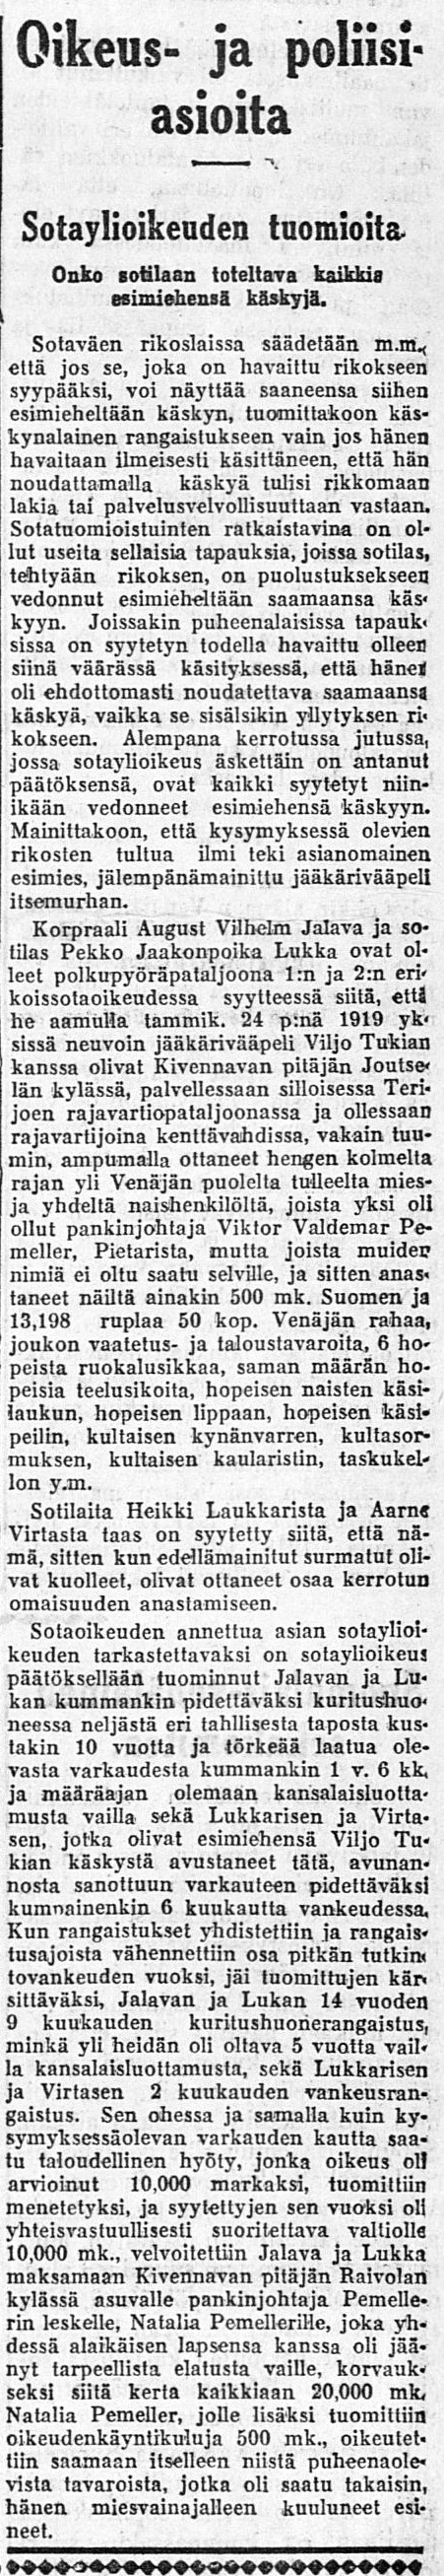 12.09.1922 Uusi Suomi.jpg